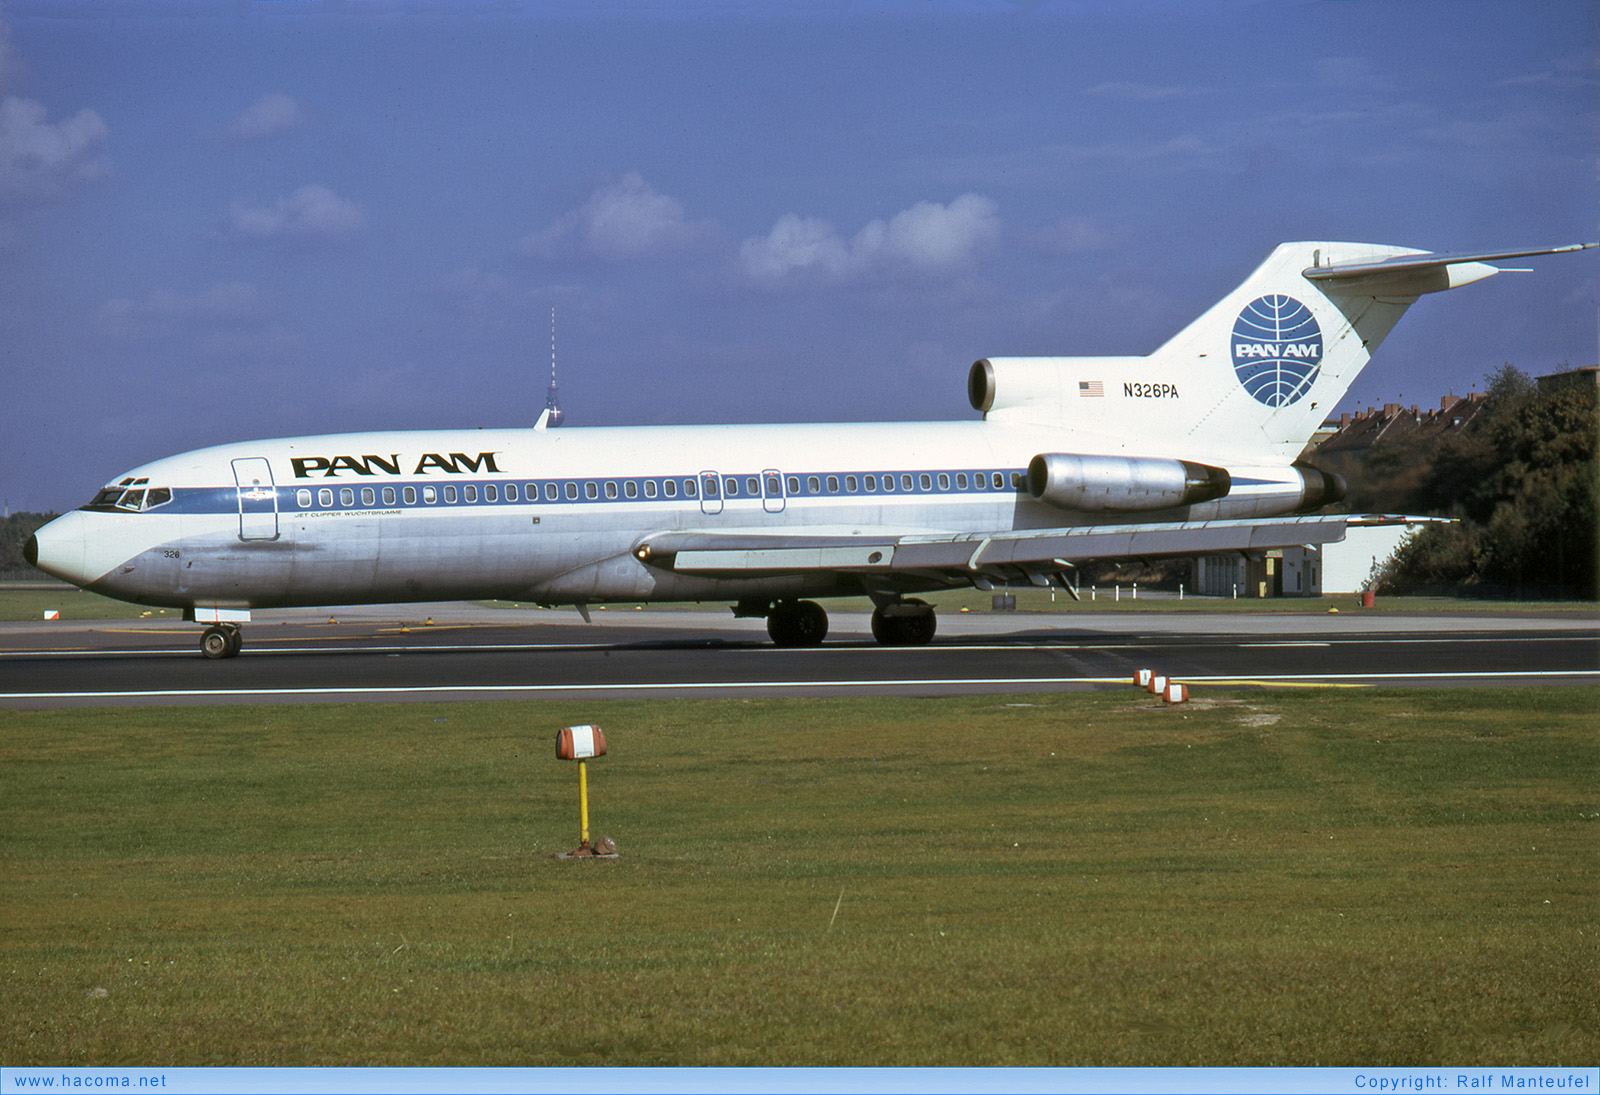 Photo of N326PA - Pan Am Clipper Muenchen / DeSoto / Nuremberg / White Falcon / Raven / Berolina / Wuchtbrumme - Berlin Tempelhof Airport - Jul 1974